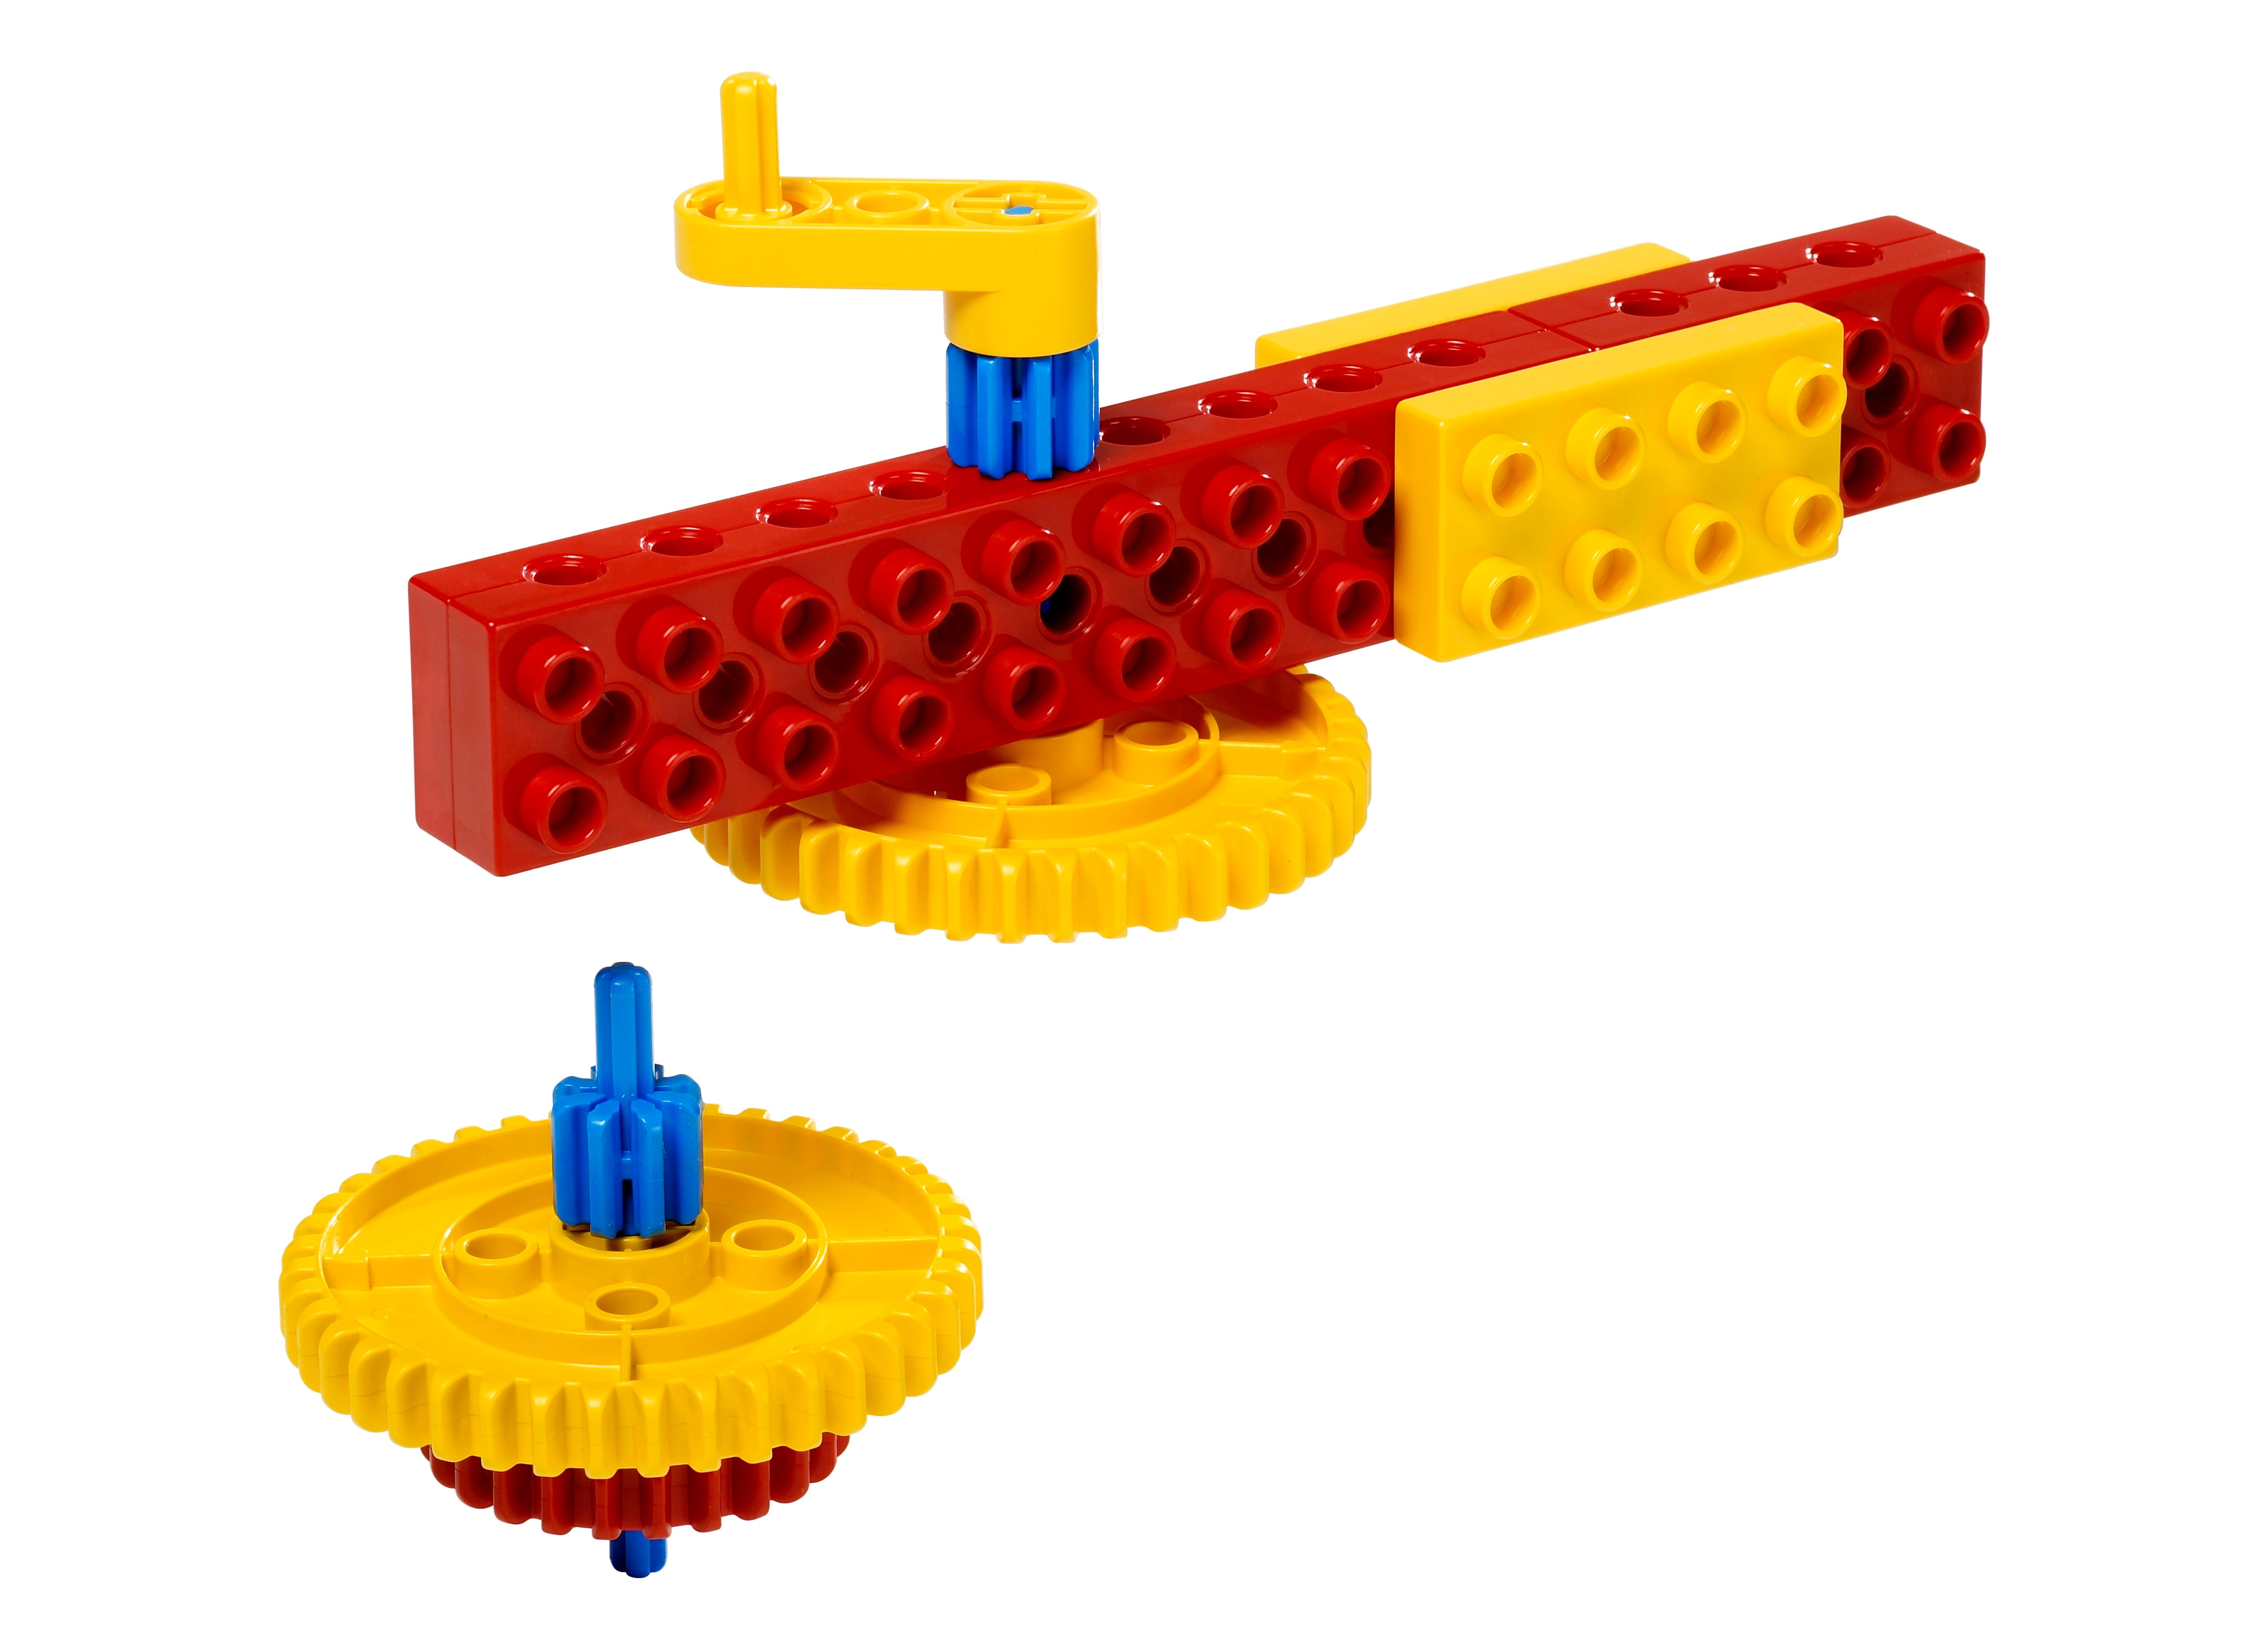 lego kits for schools